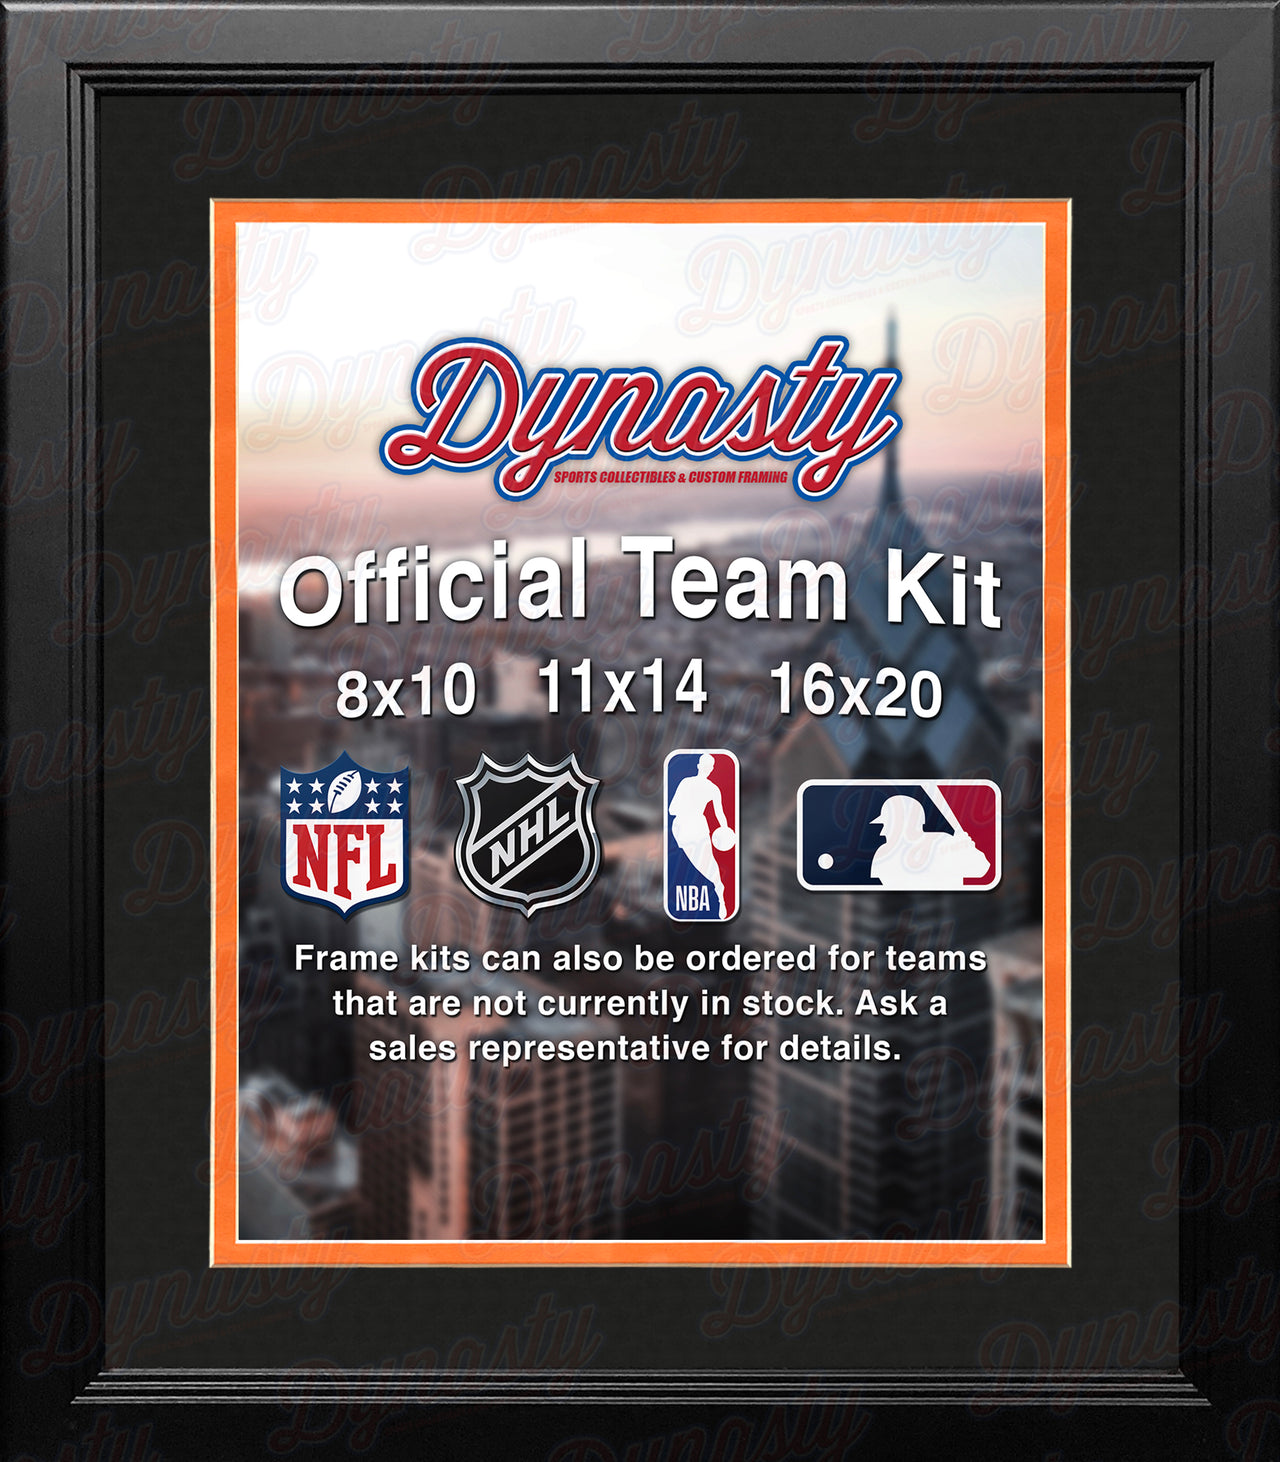 MLB Baseball Photo Picture Frame Kit - Miami Marlins (Black Matting, Orange Trim) - Dynasty Sports & Framing 